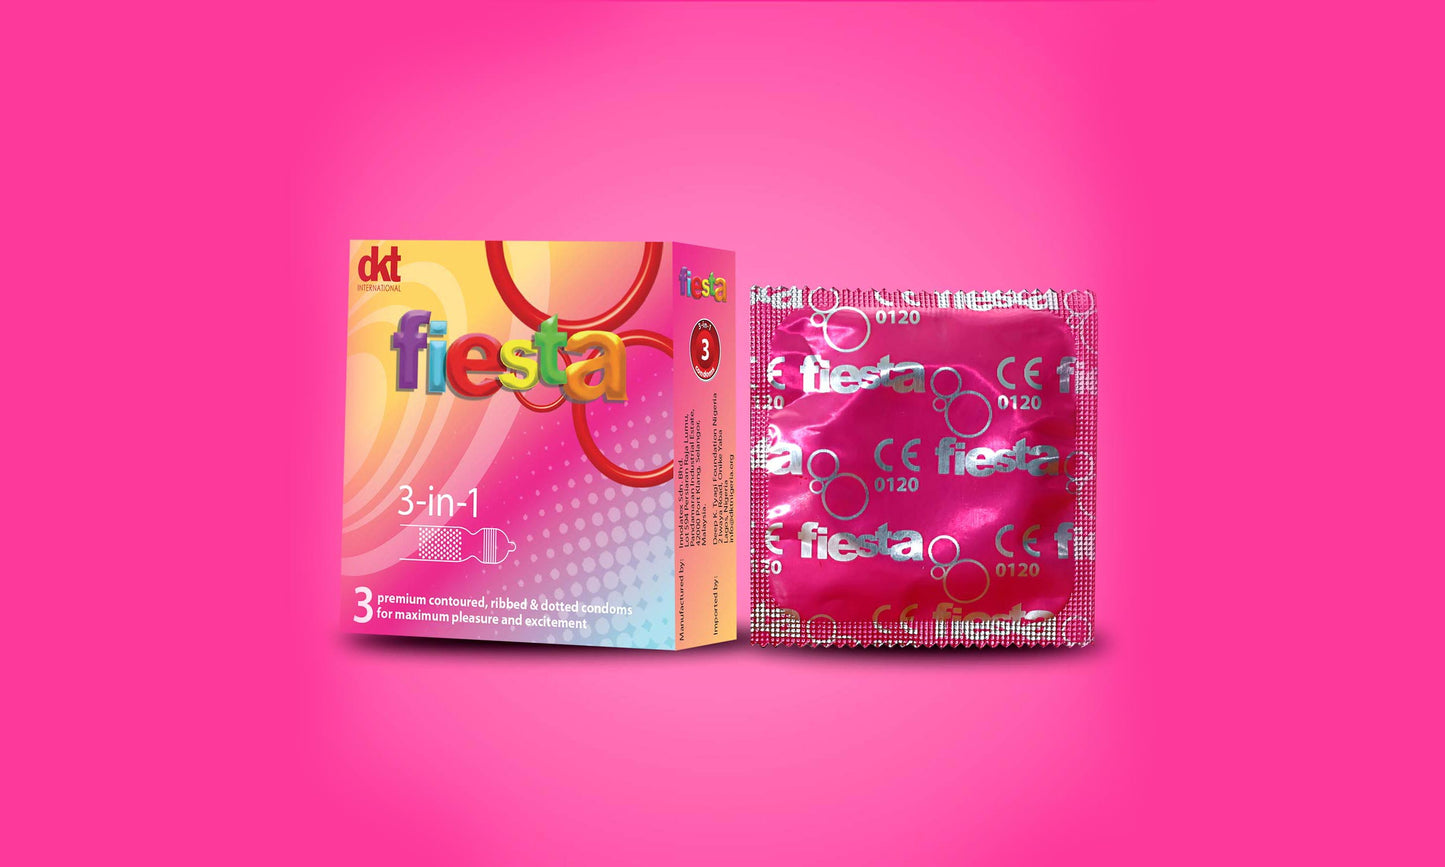 Fiesta 3-1 condom